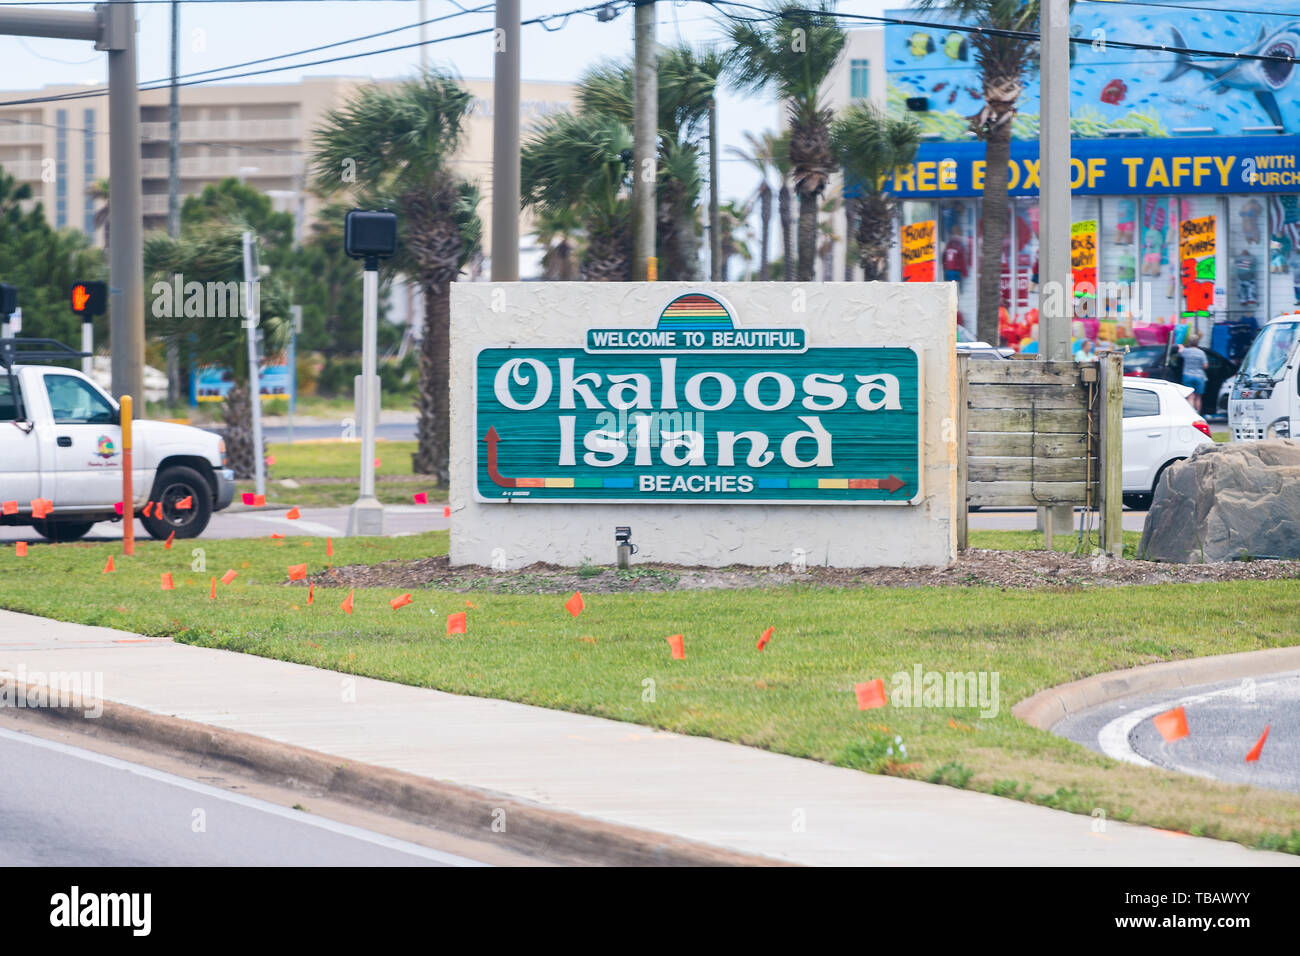 Fort Walton Beach, USA - April 24, 2018: Welcome to Beautiful Okaloosa Island beaches road sign in Emerald Coast city, Gulf of Mexico in Florida panha Stock Photo